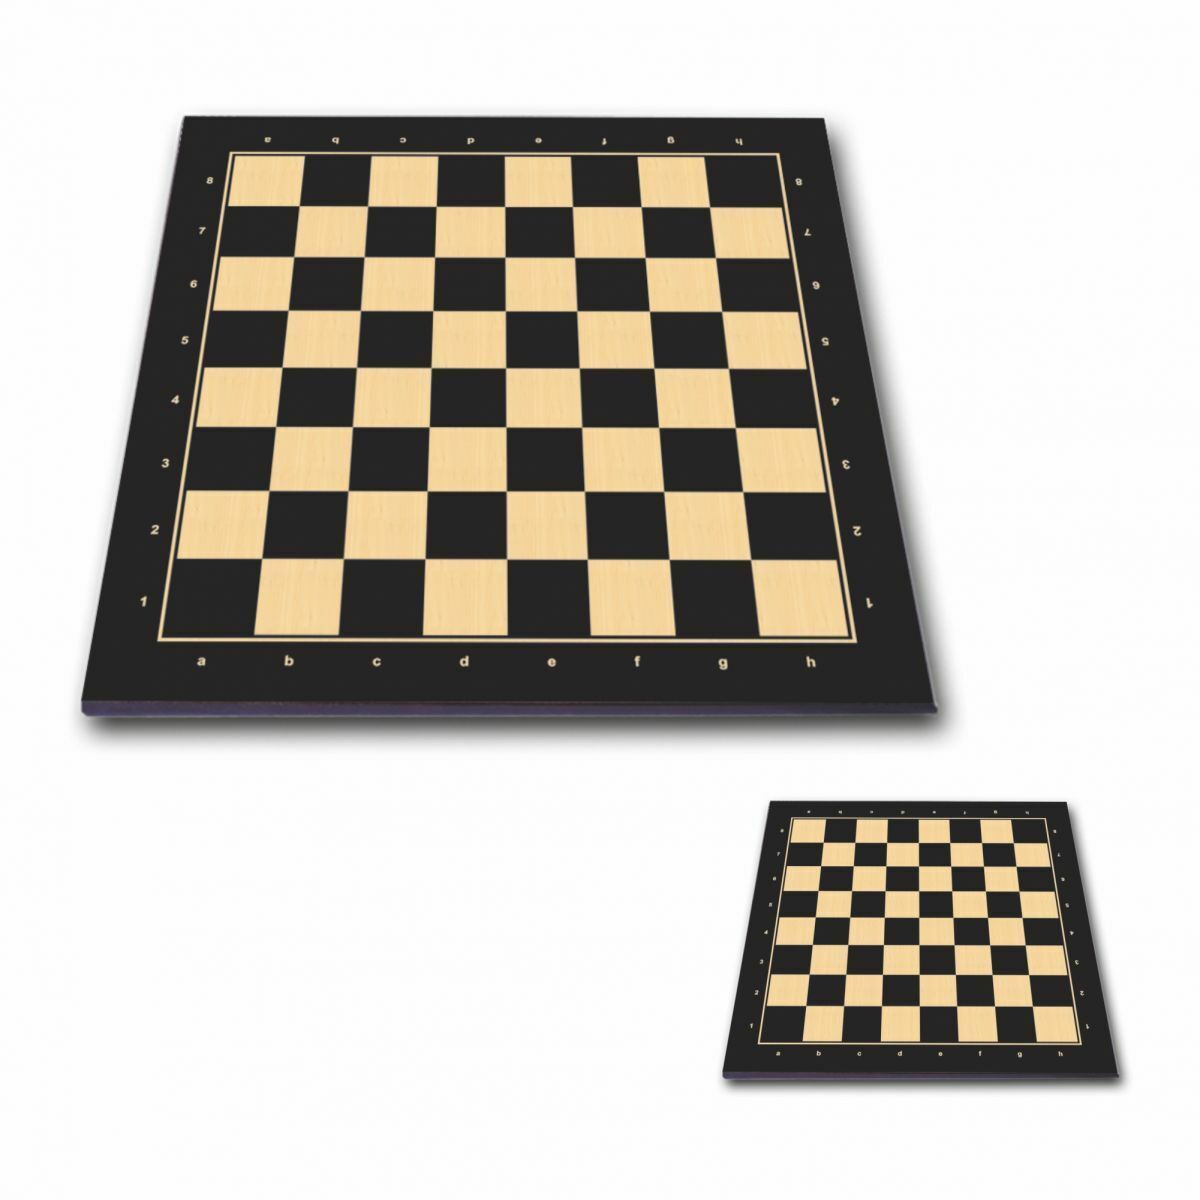 Professional Tournament Chess Board 5P BLACK 2.1" / 54 mm field - 20" size - $69.97